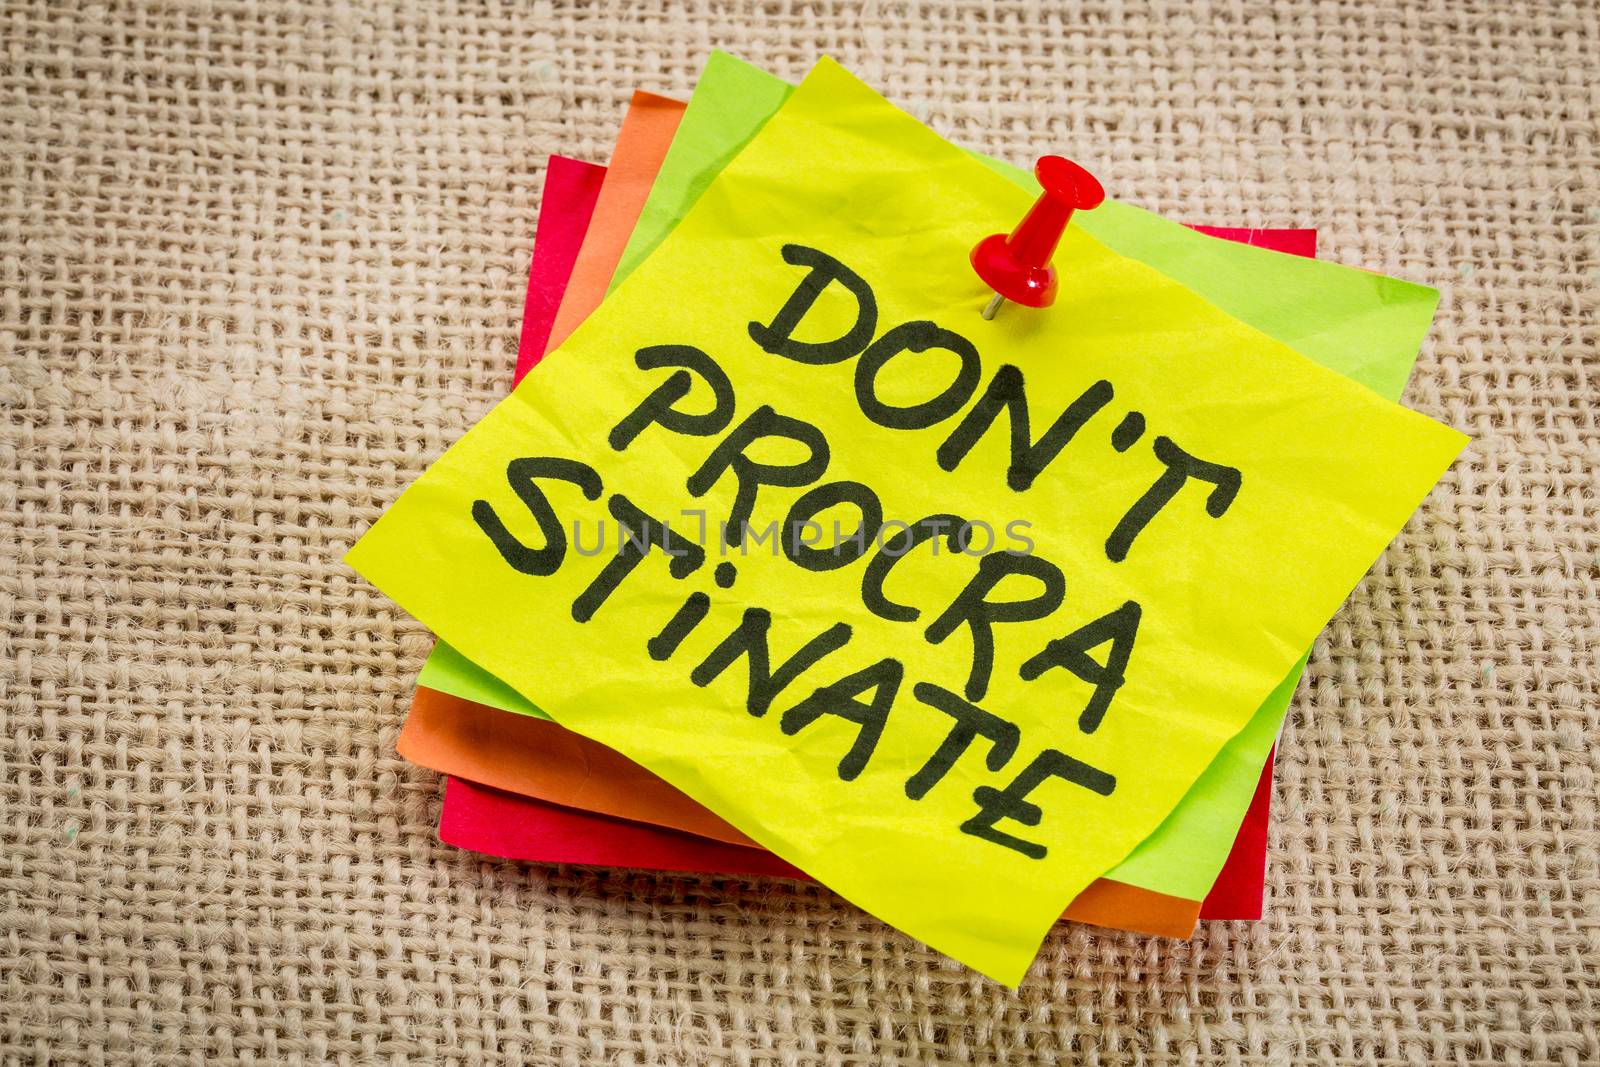 do not procrastinate reminder on a yellow sticky note